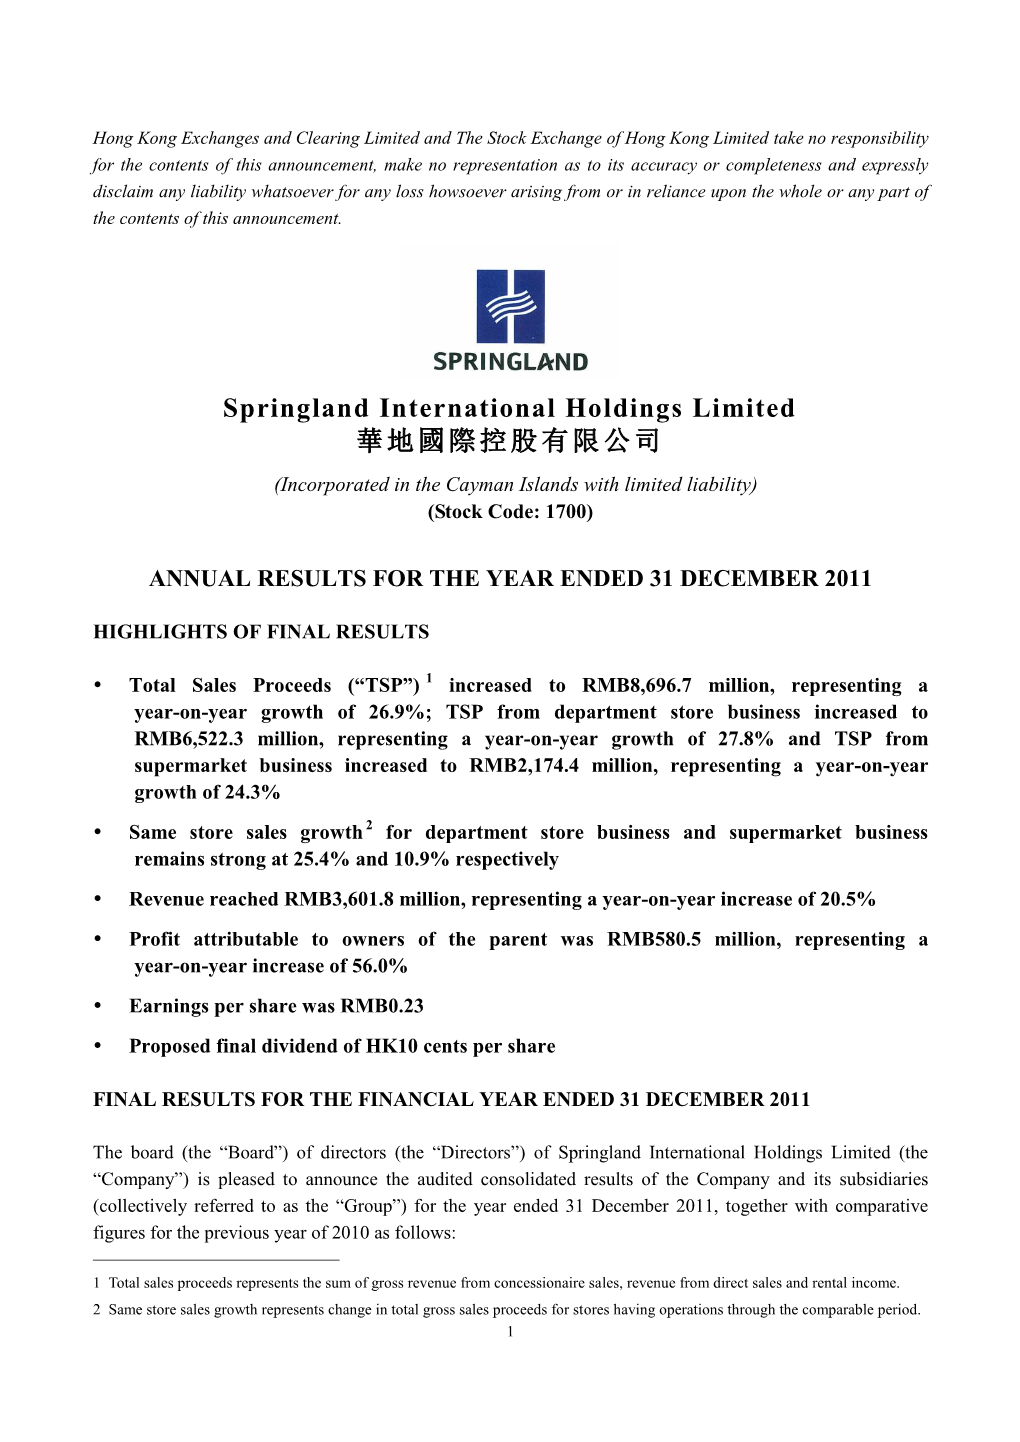 Springland International Holdings Limited 華地國際控股有限公司